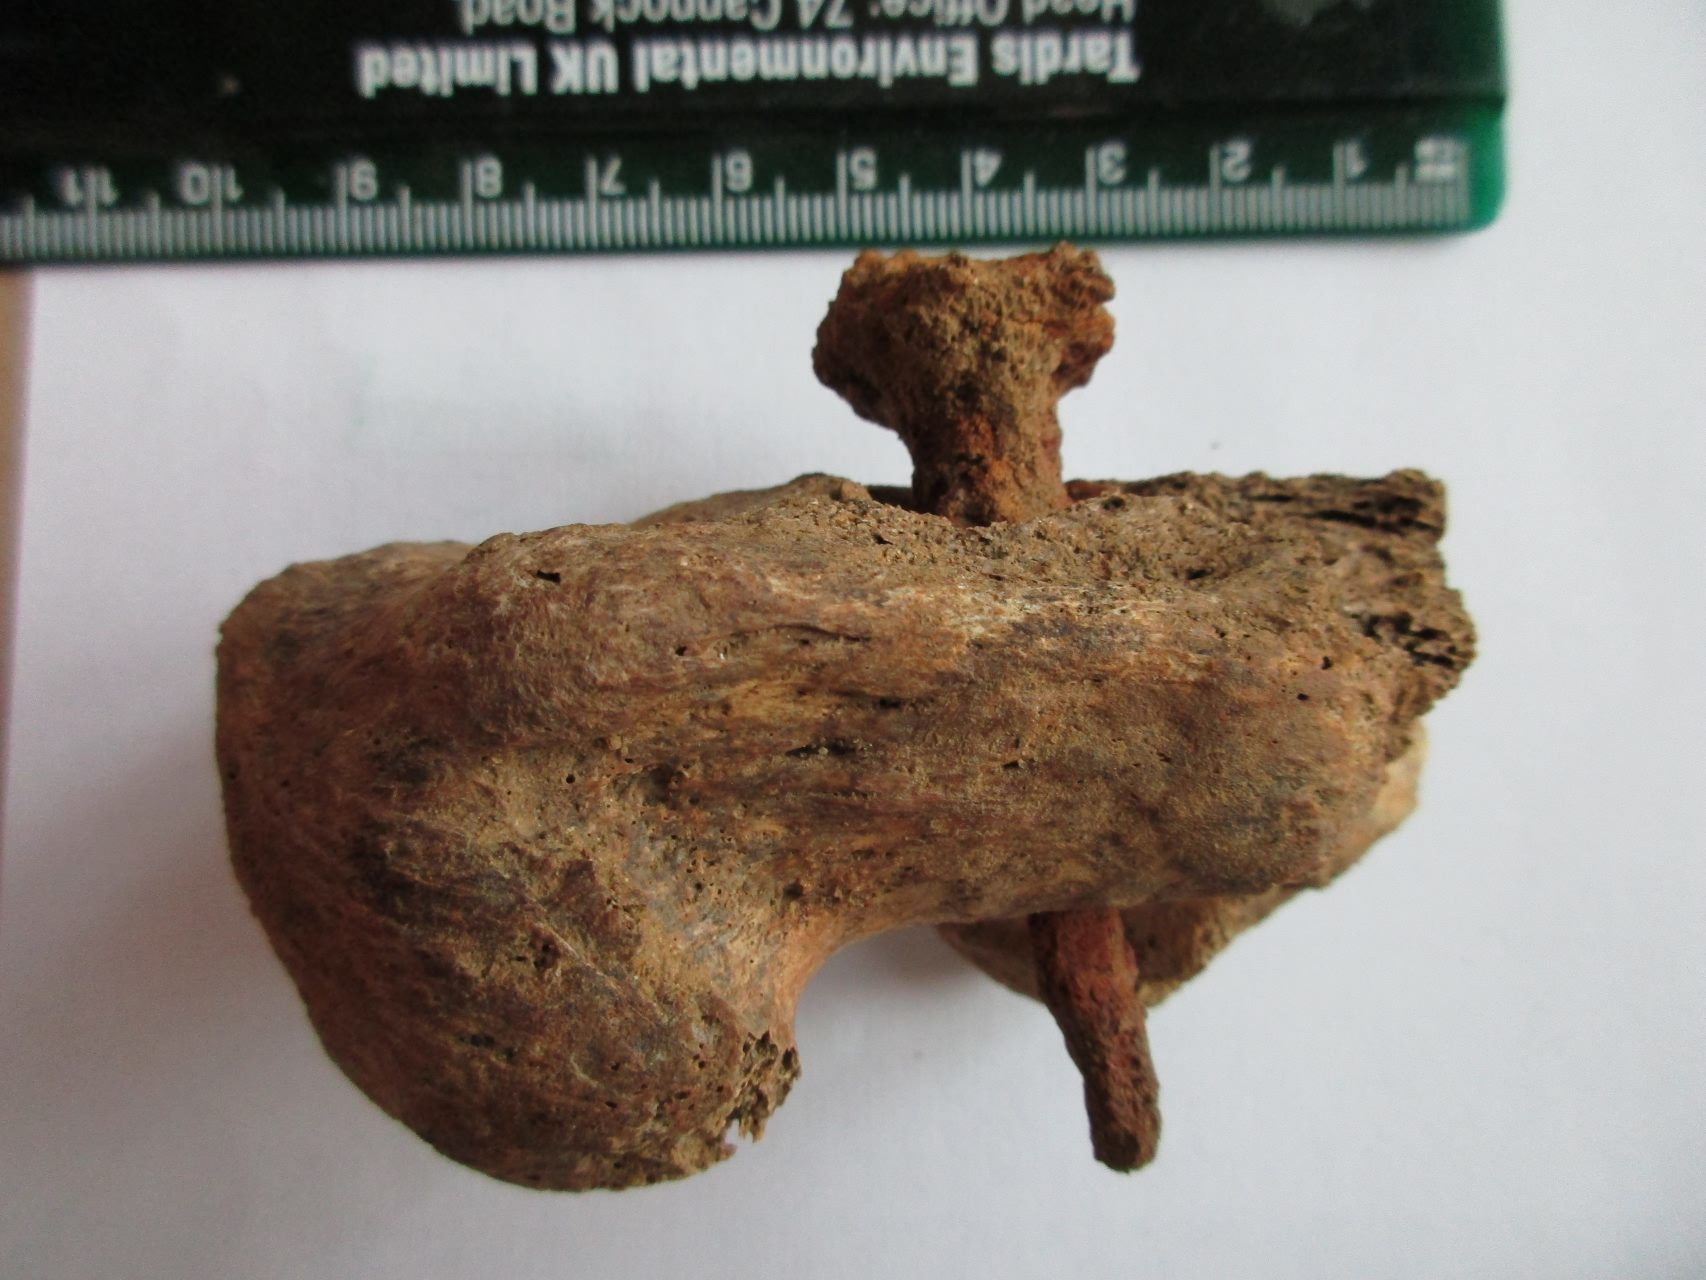 Crucifixion nail in heel after washing found in Fenstanton